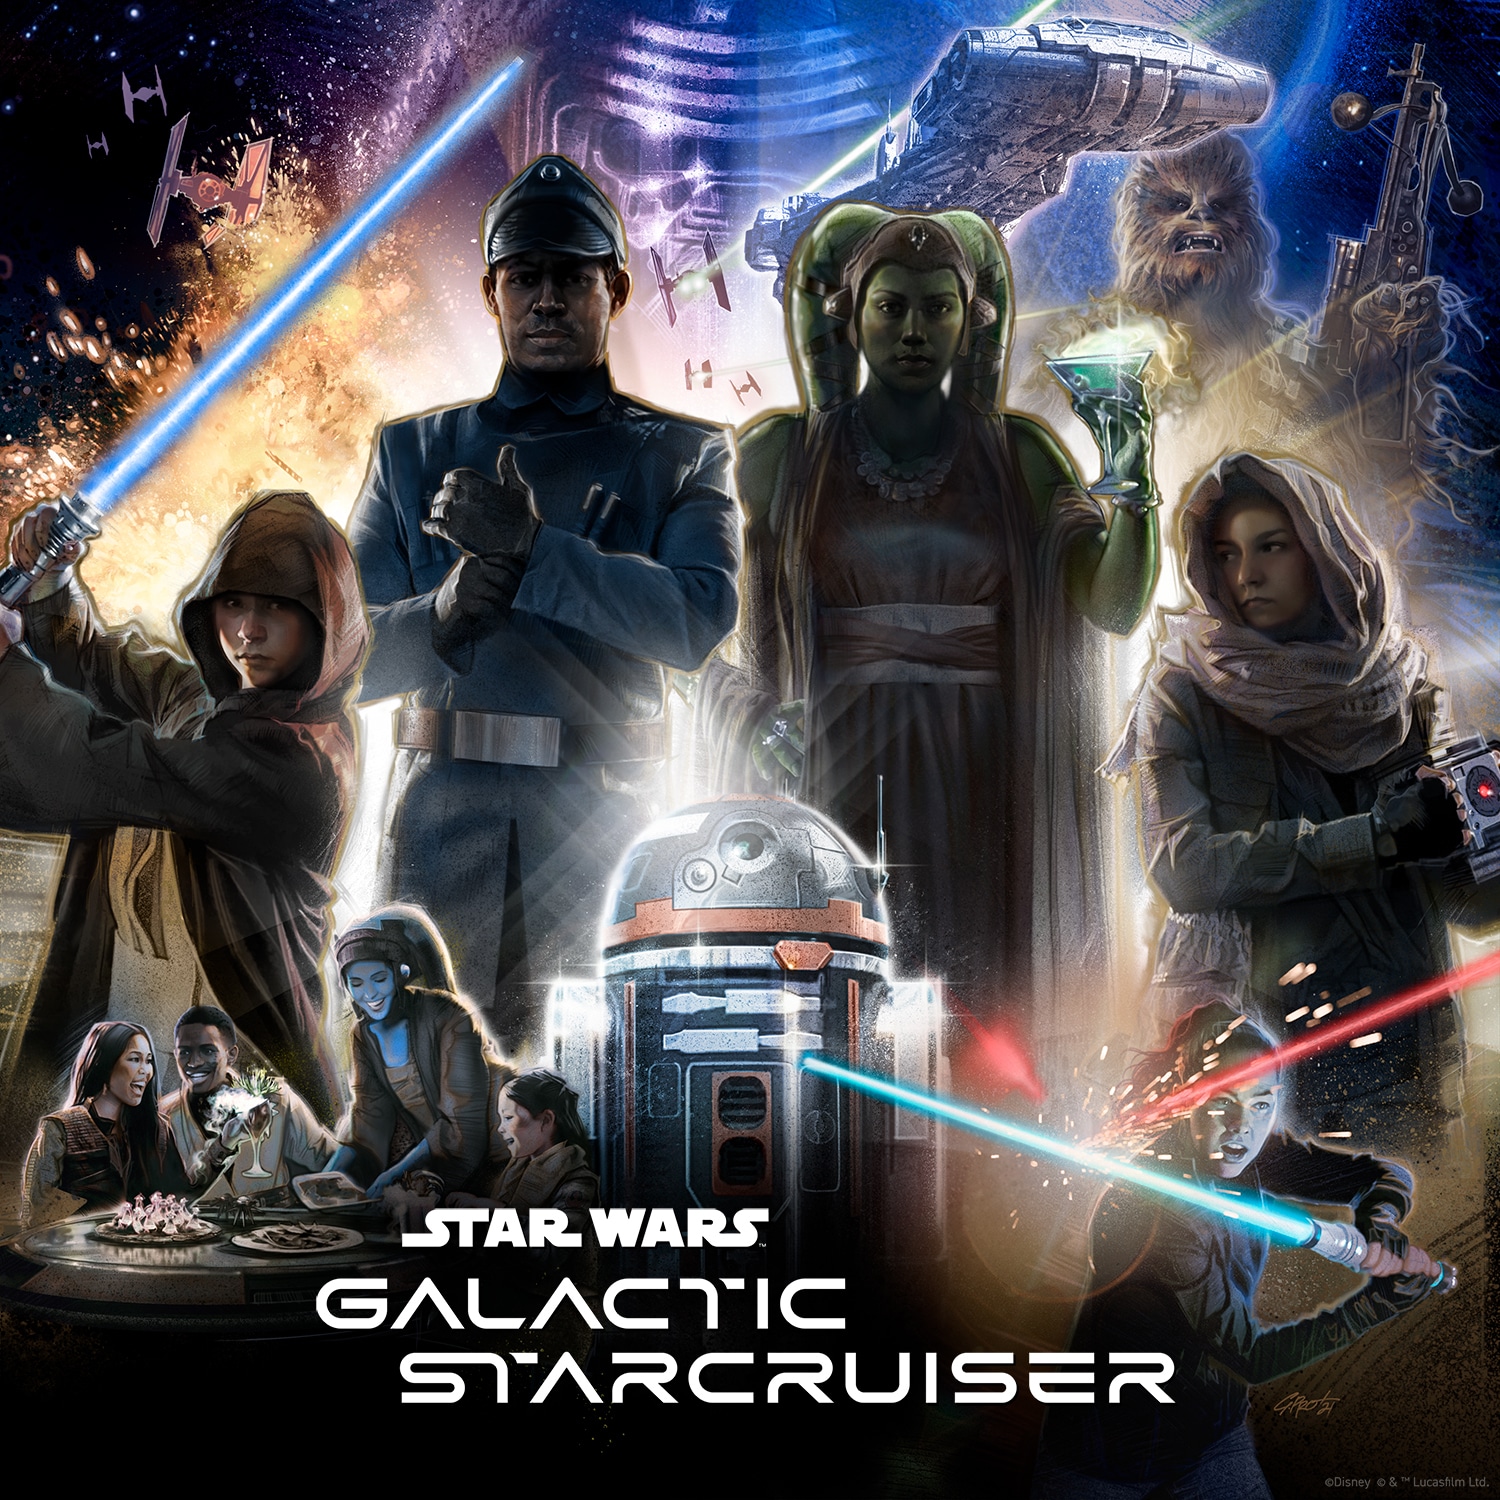 Star Wars: Galactic Starcruiser Instagram Effect and Digital Image Downloads